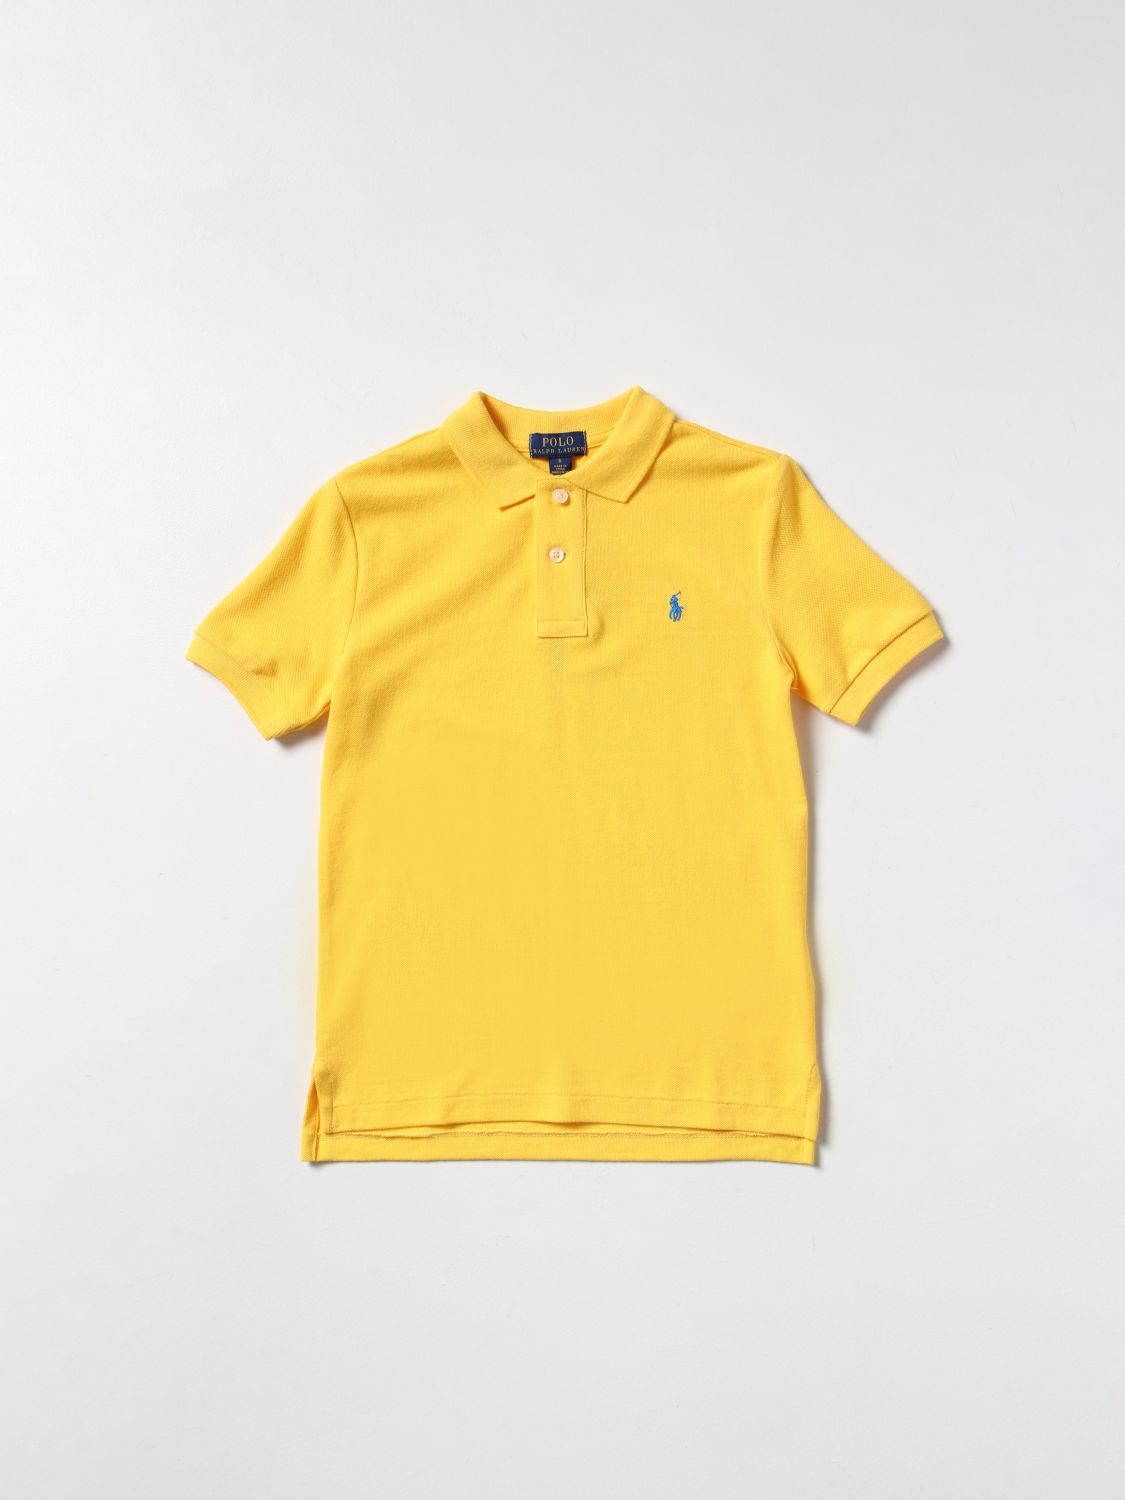 POLO RALPH LAUREN: Polo shirt kids | Polo Shirt Polo Ralph Lauren Kids ...